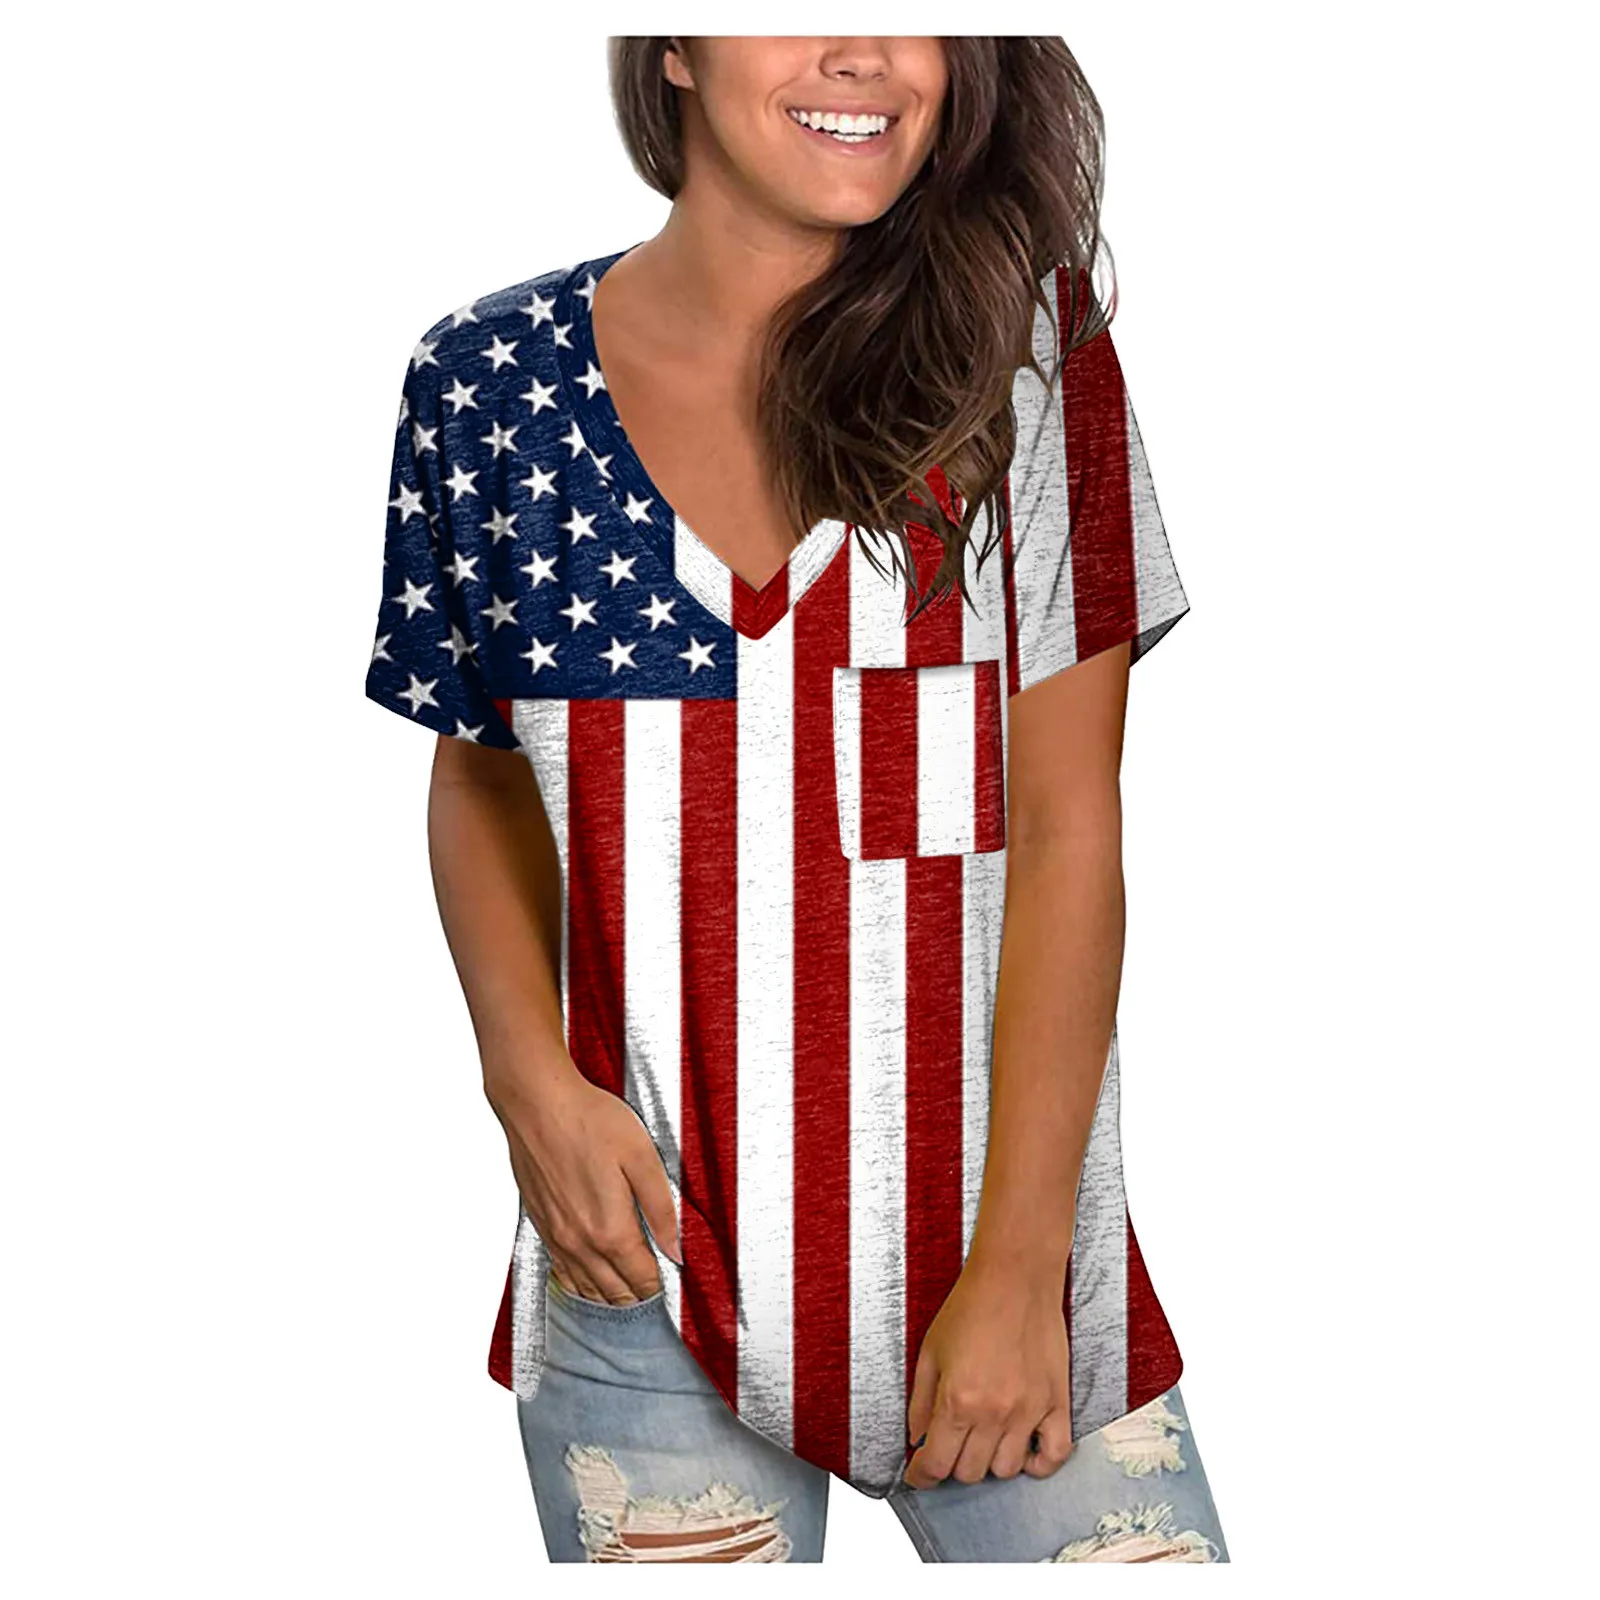 Dainzuy Women Tops Summer Plus Size V Neck Star Stripe USA Flag America T-Shirt Fashion Top Blouse 